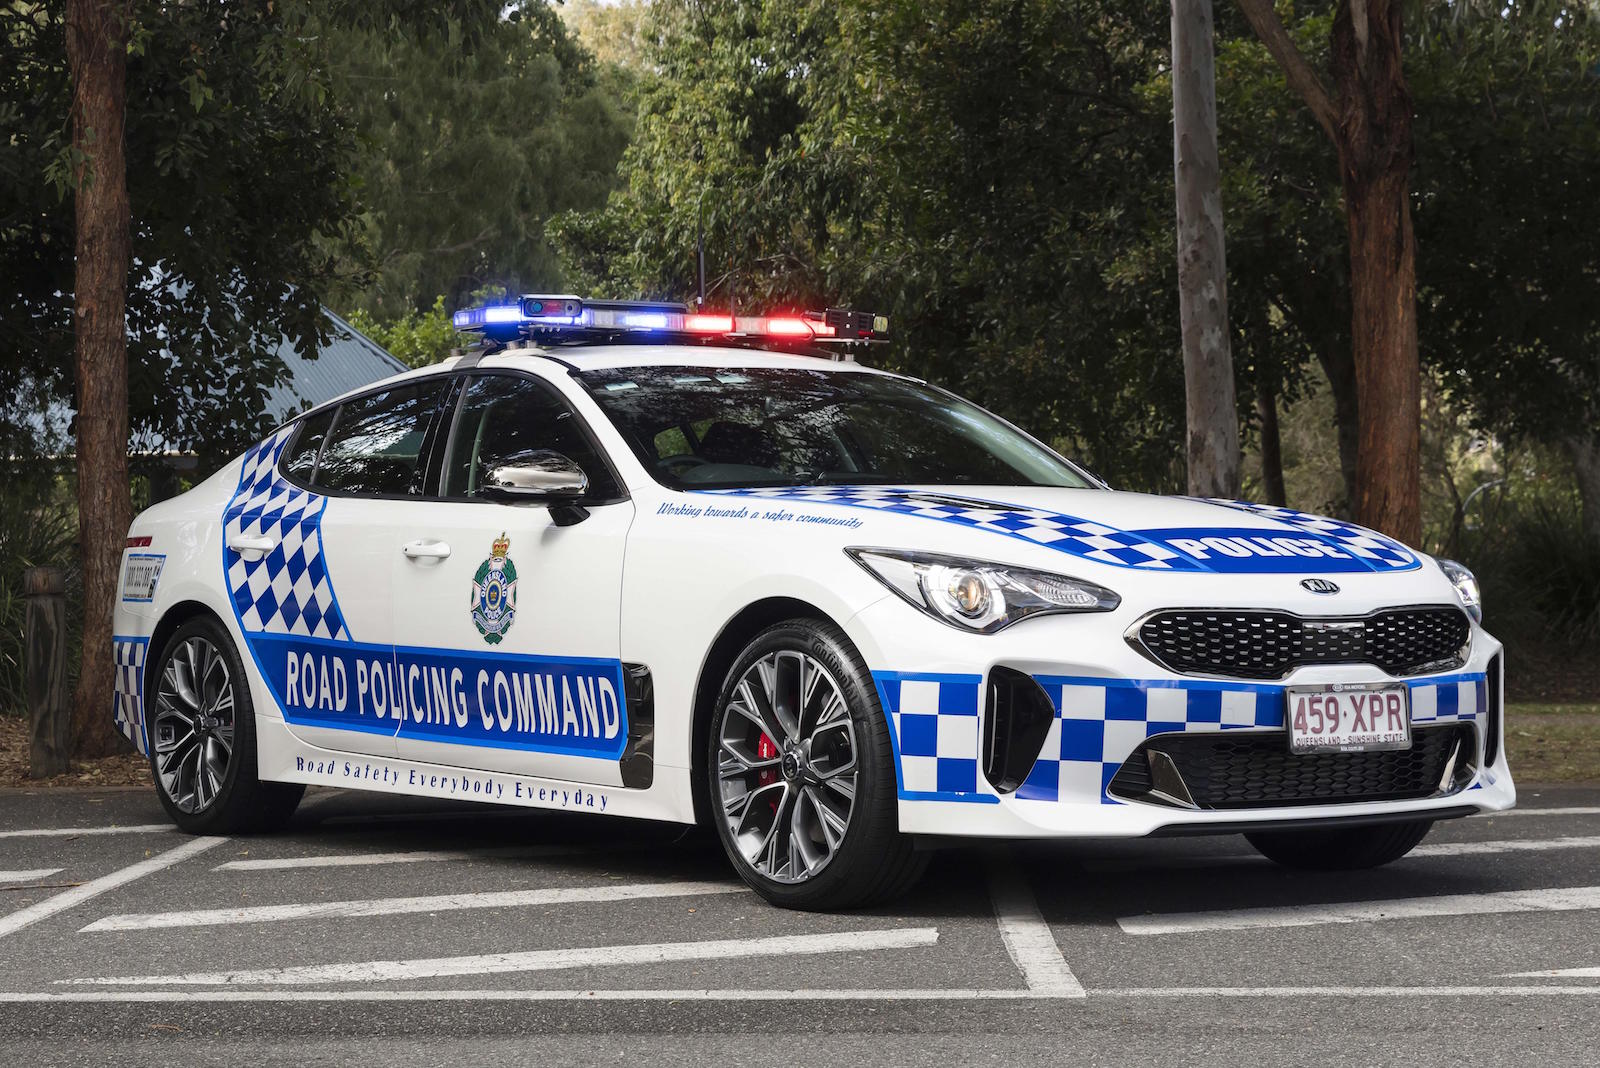 Kia Stinger police cars confirmed for Queensland force